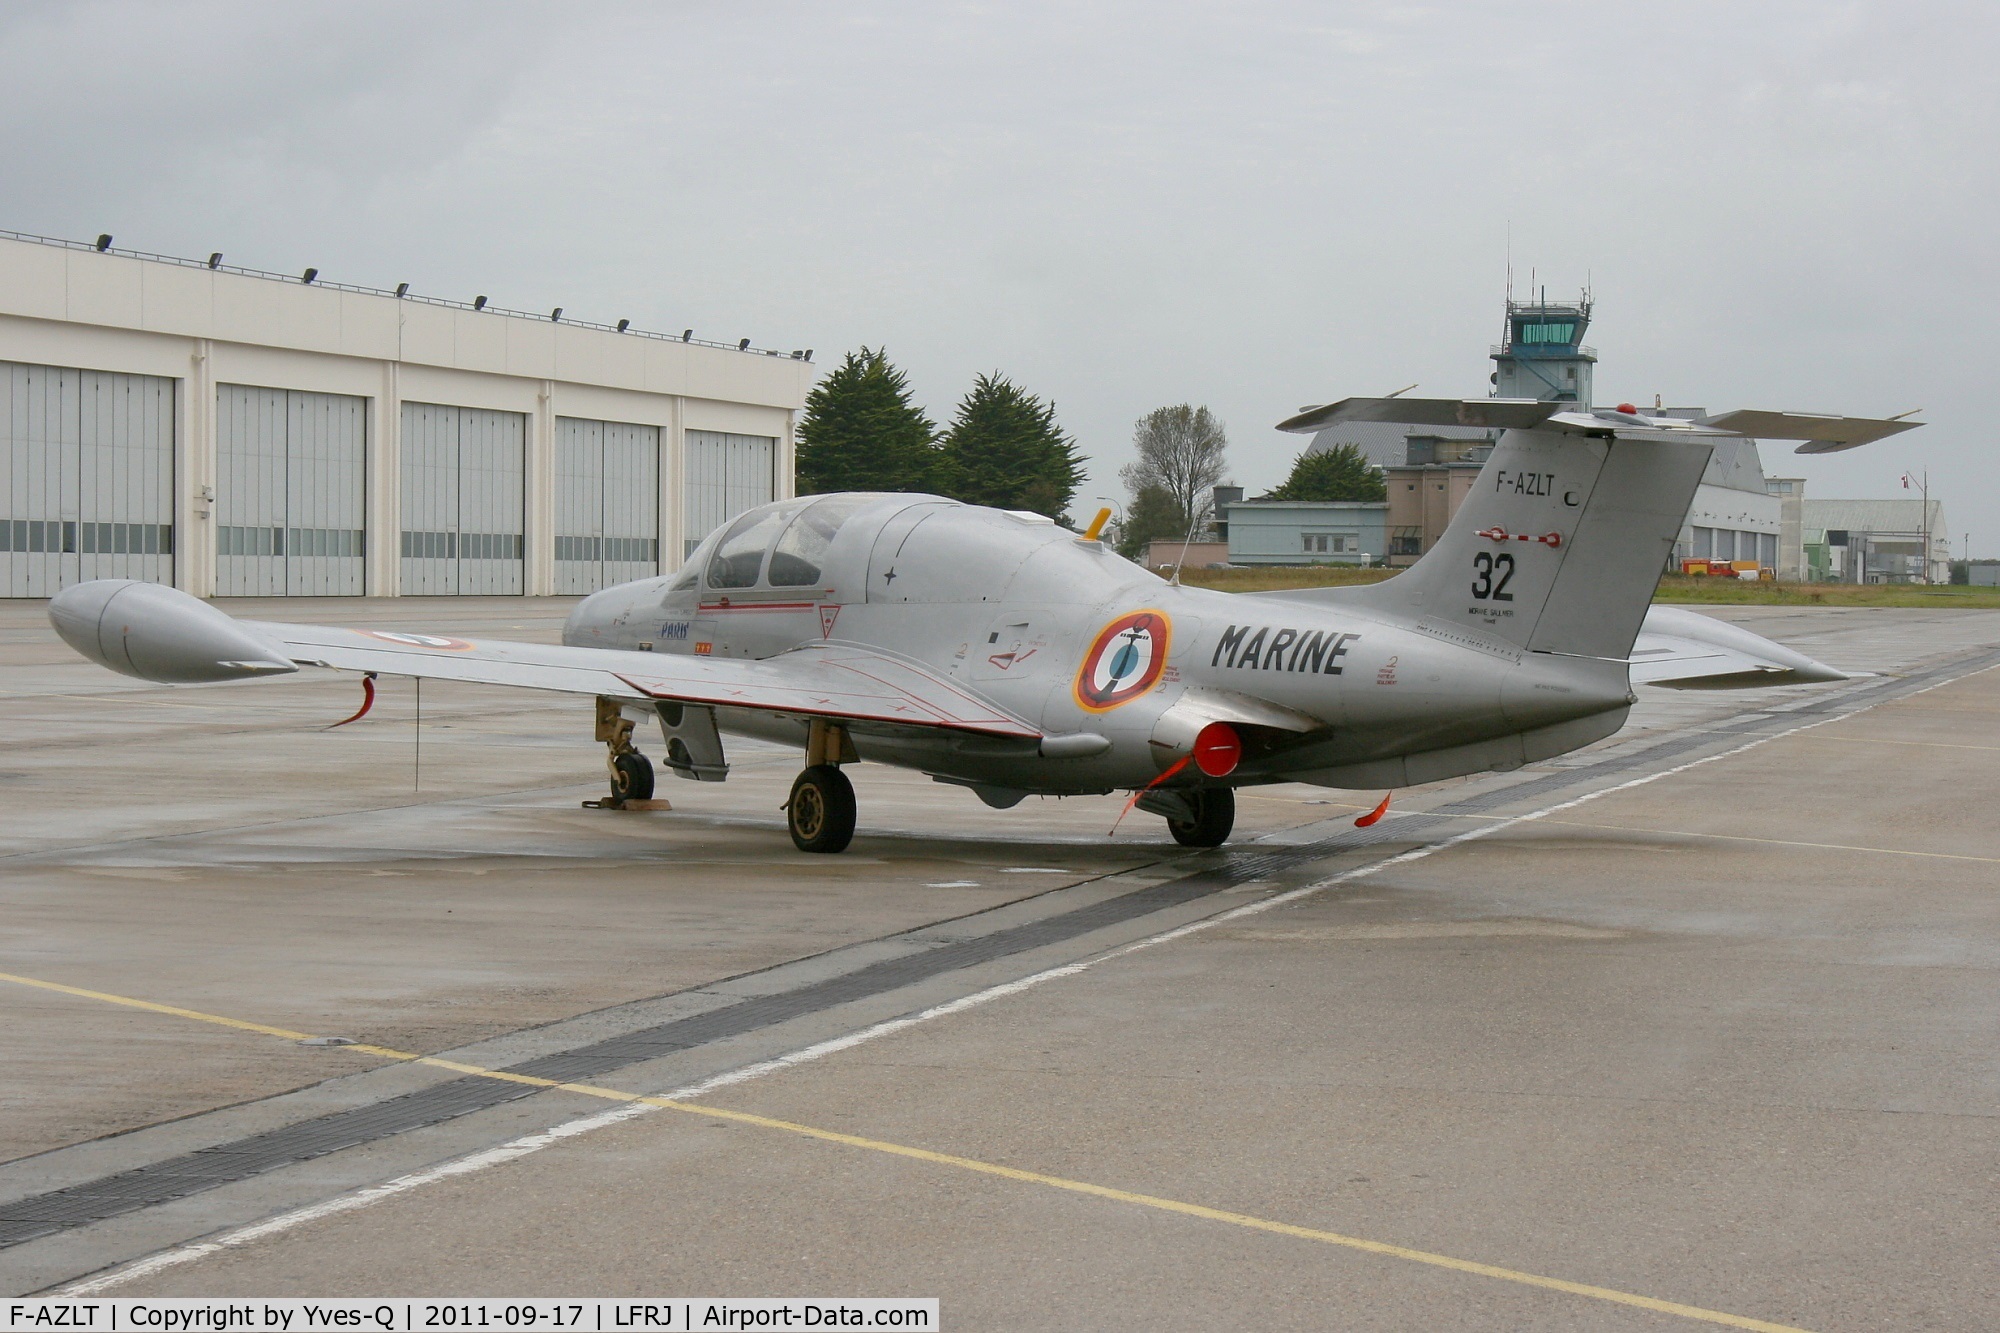 F-AZLT, Morane-Saulnier MS.760 Paris I C/N 32, Morane-Saulnier MS.760A Paris, Static Display Open Days 2011, Landivisiau Naval Air Base (LFRJ)